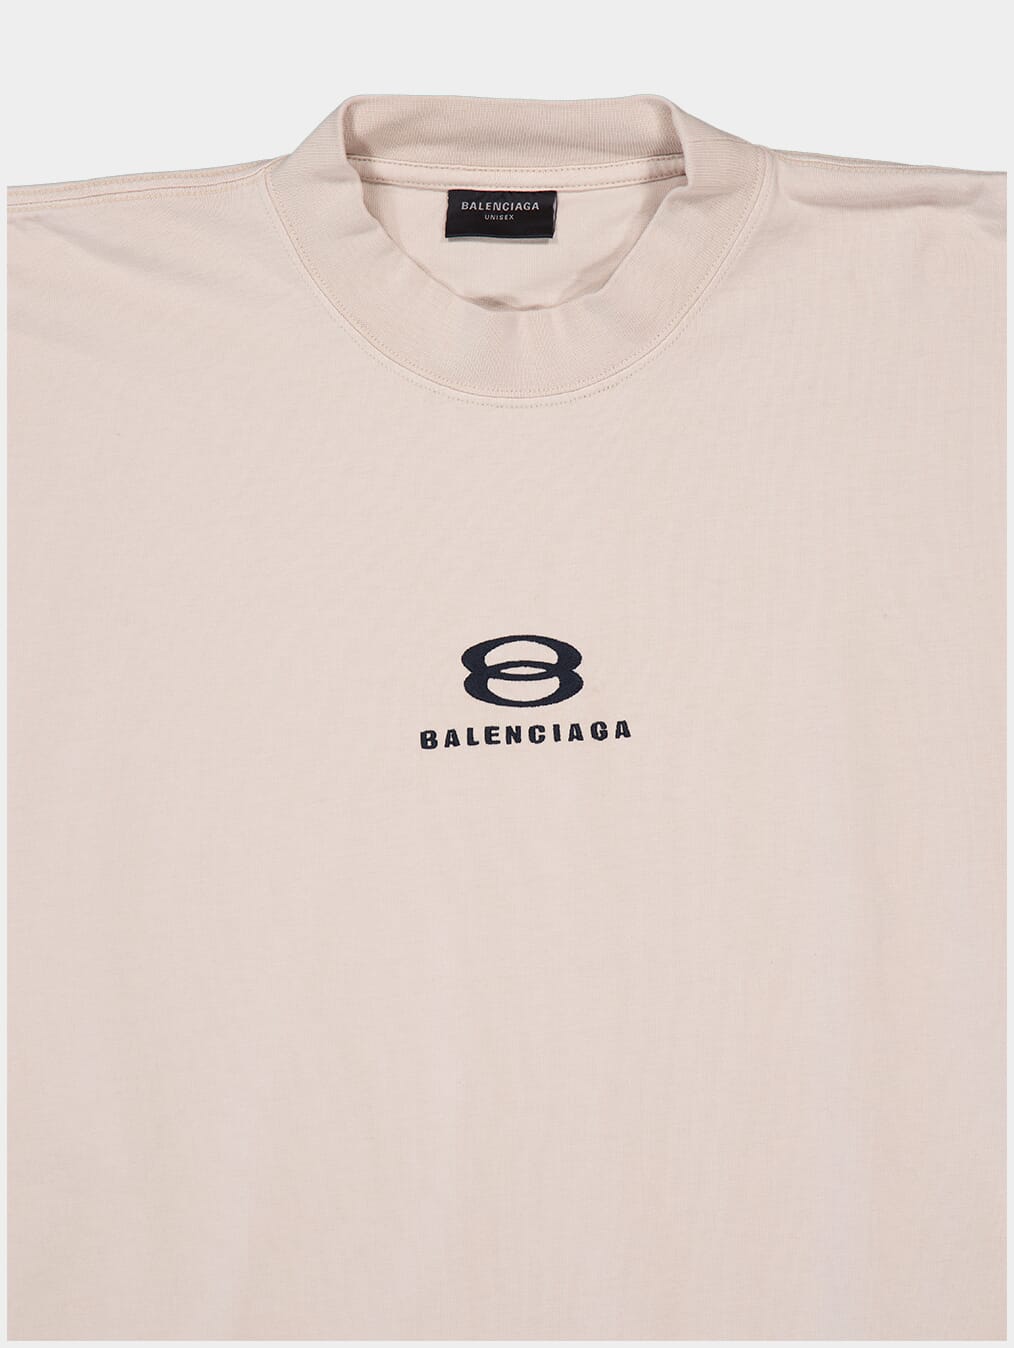 BalenciagaUnity Sports Icon Cotton T-Shirt at Fashion Clinic